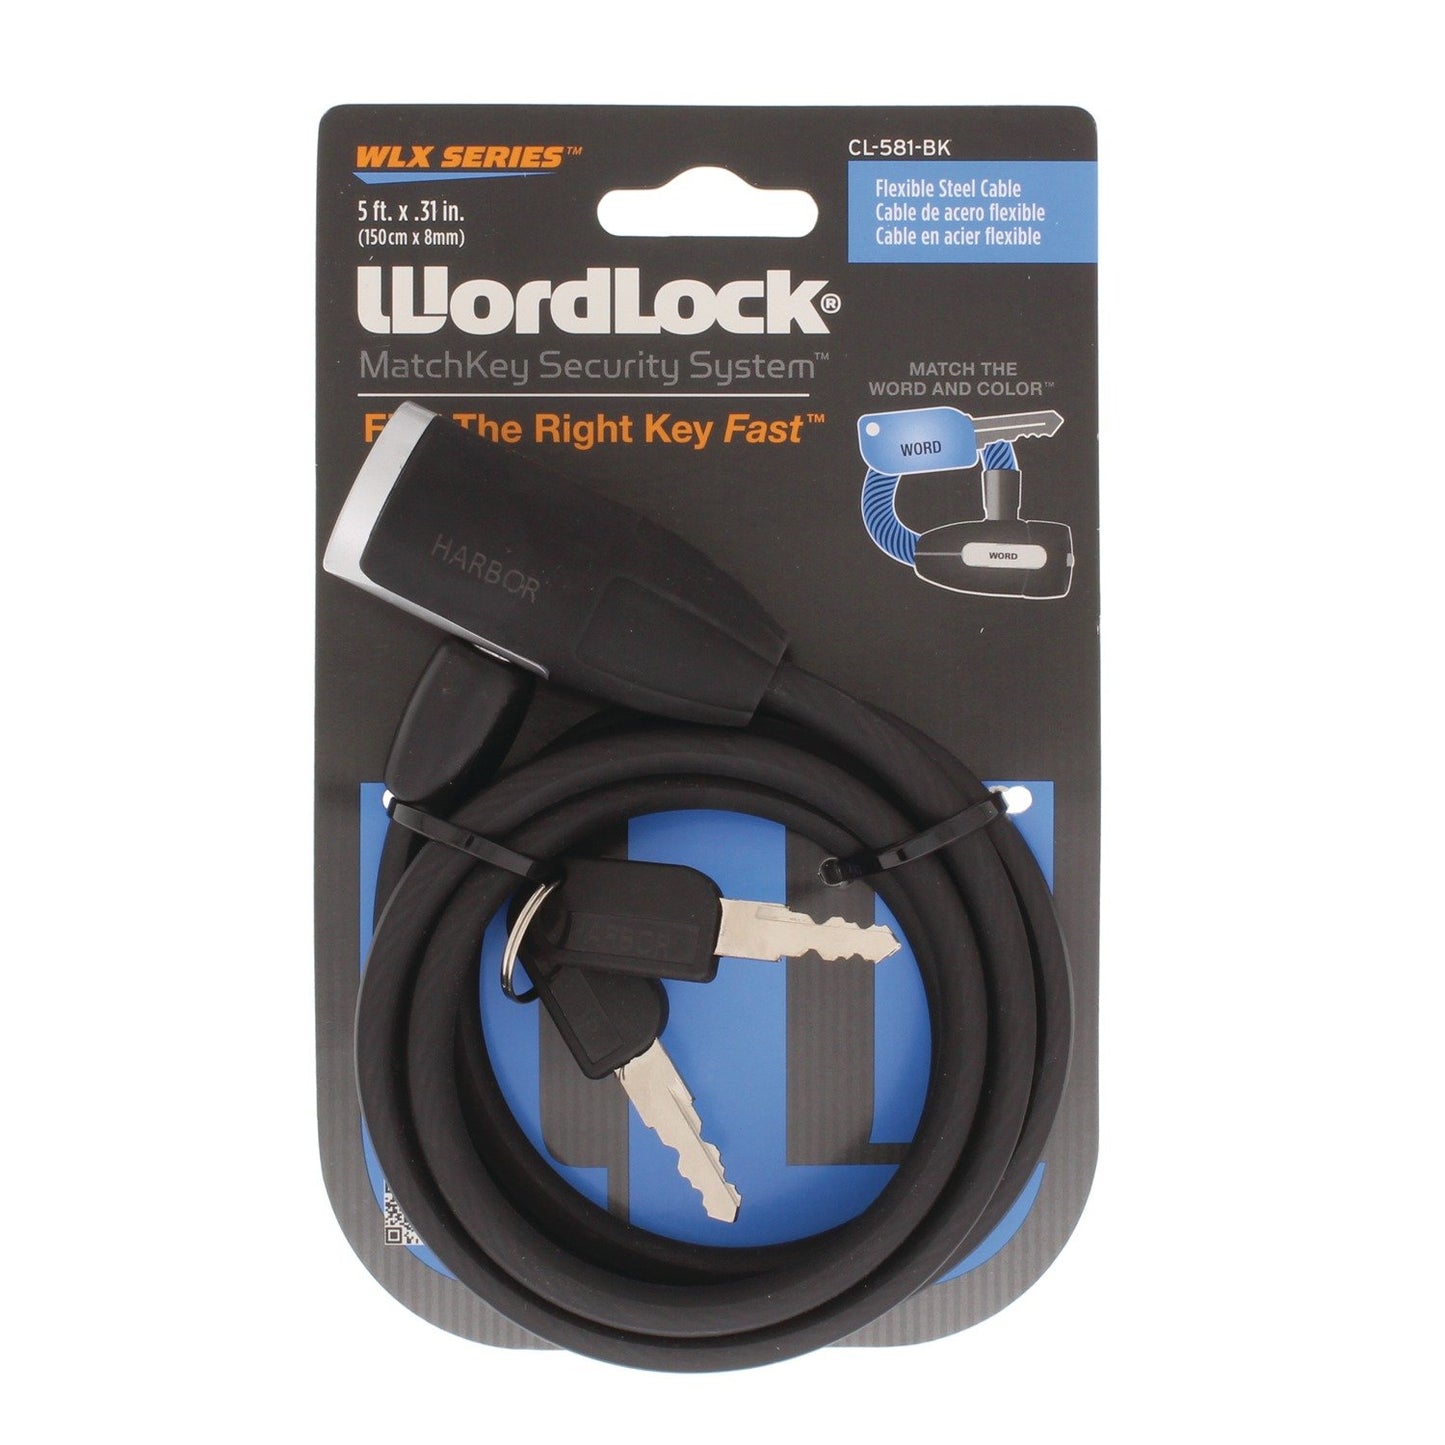 Wordlock CL581BK WLX Series 8mm Matchkey Cable Lock (Black)